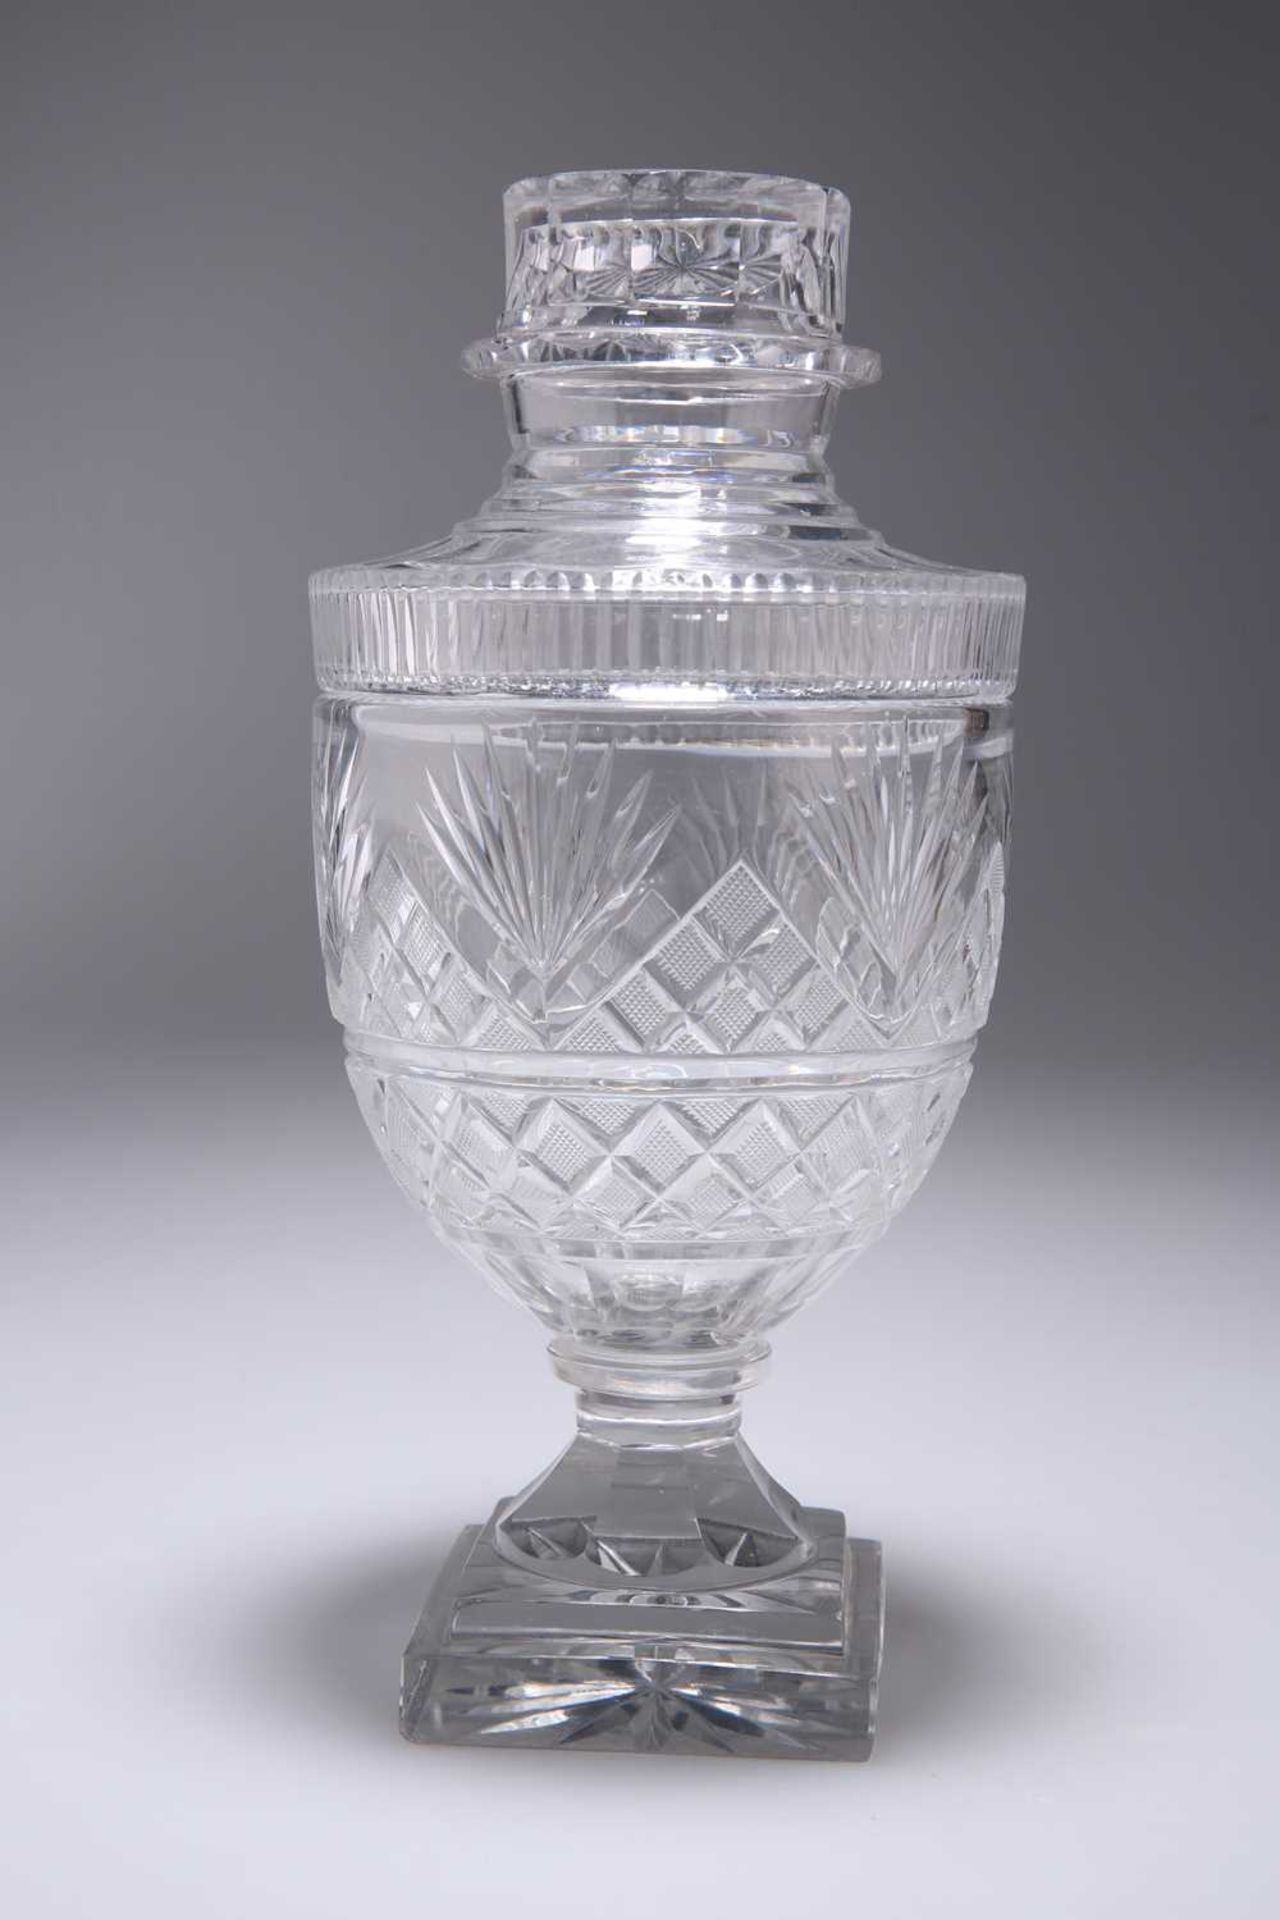 AN EARLY 19TH CENTURY CUT-GLASS BONBONNIÈRE